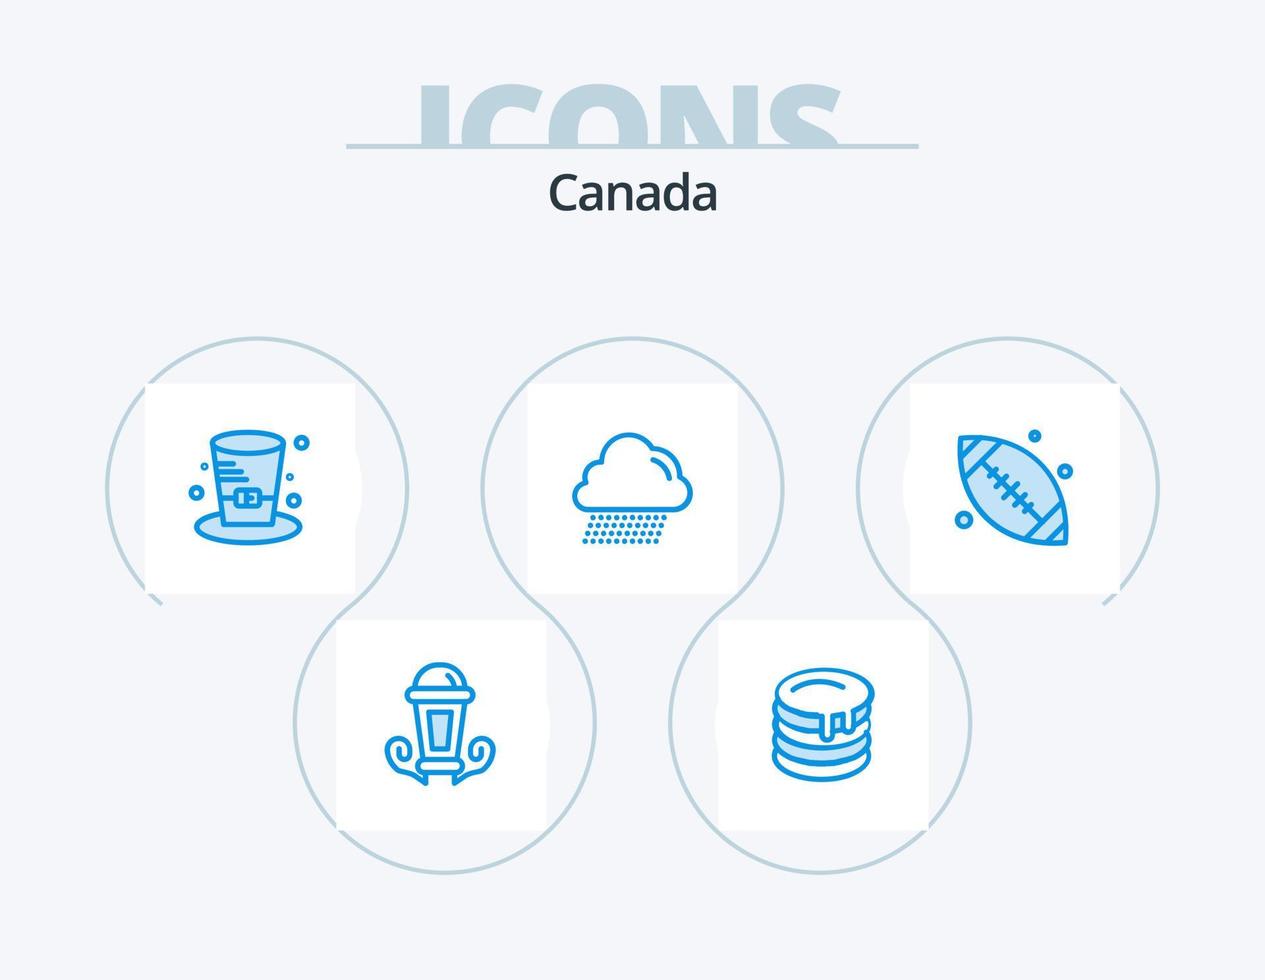 pack d'icônes bleu canada 5 conception d'icônes. base-ball. Canada. casquette. Canada. nuage vecteur